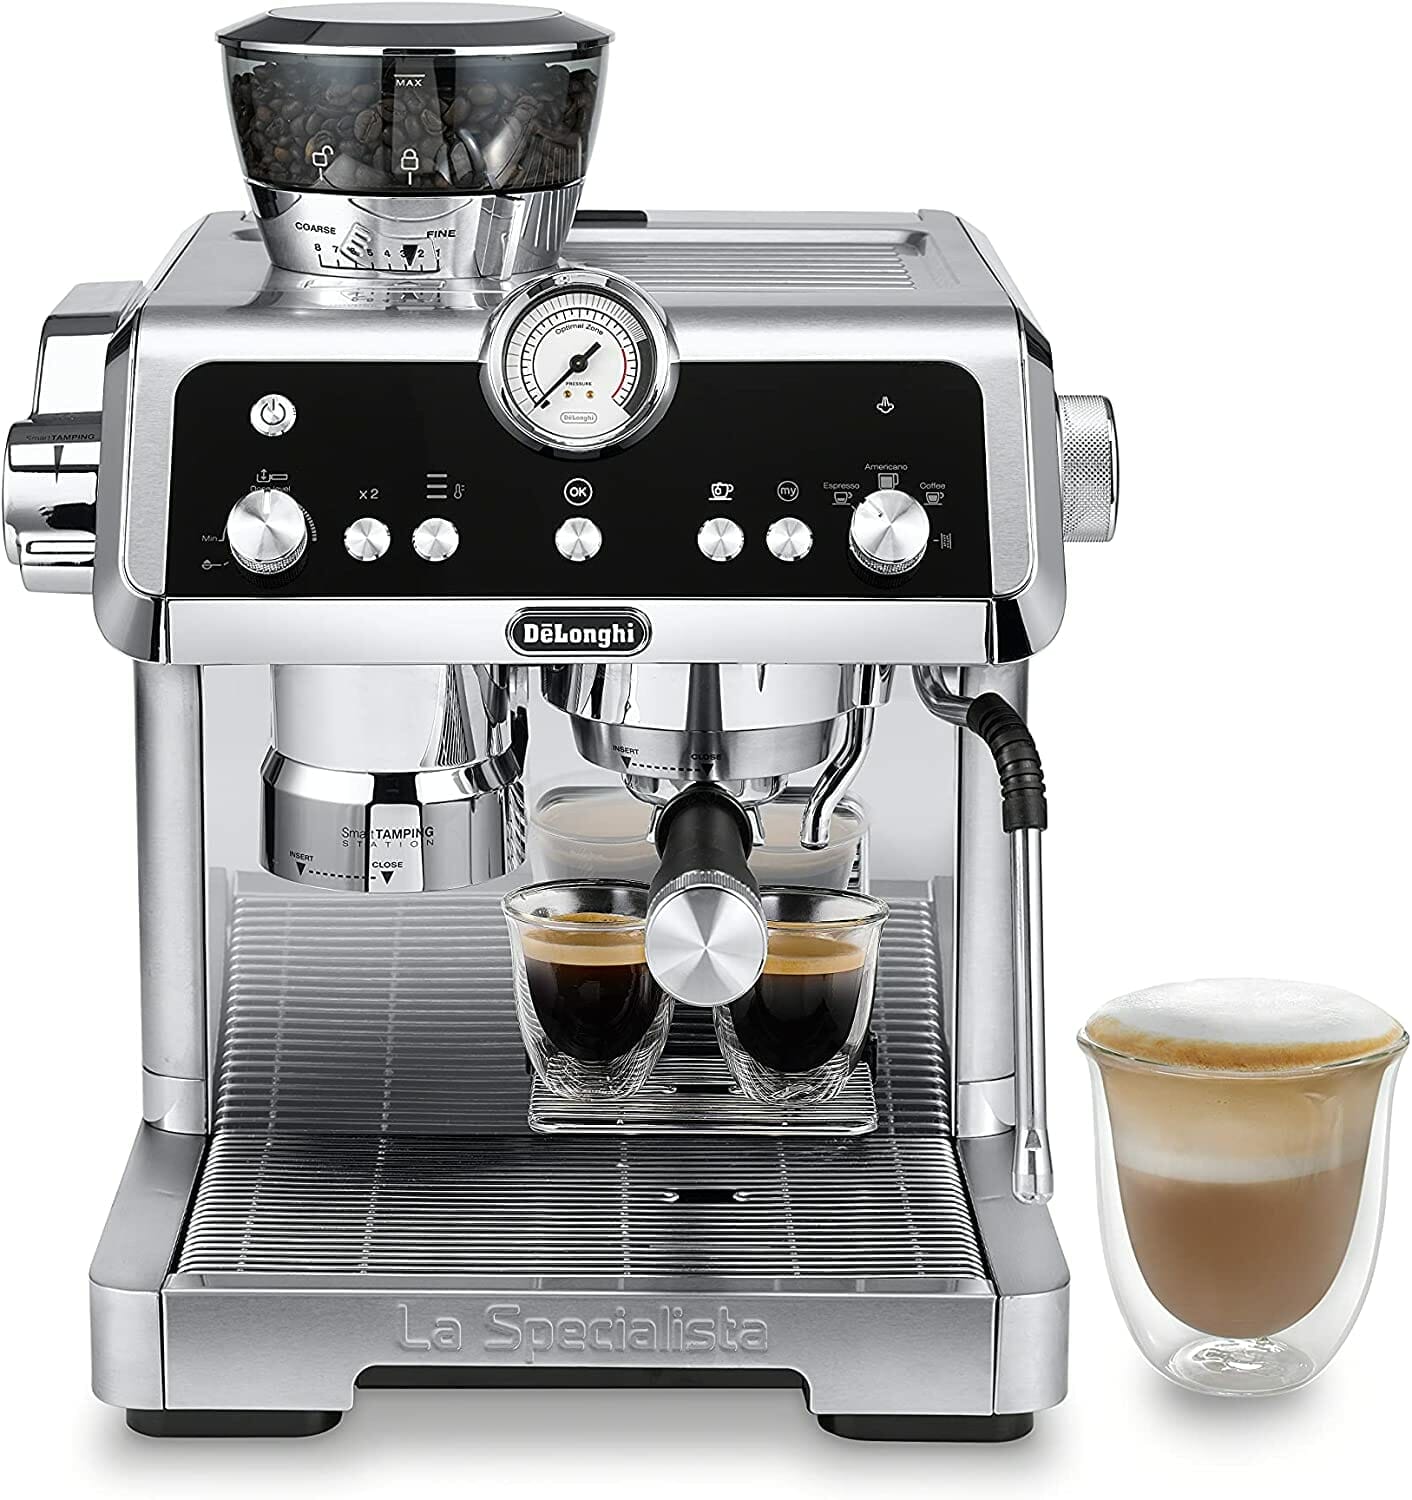 De'Longhi La Specialista Prestigio Espresso Machine Review